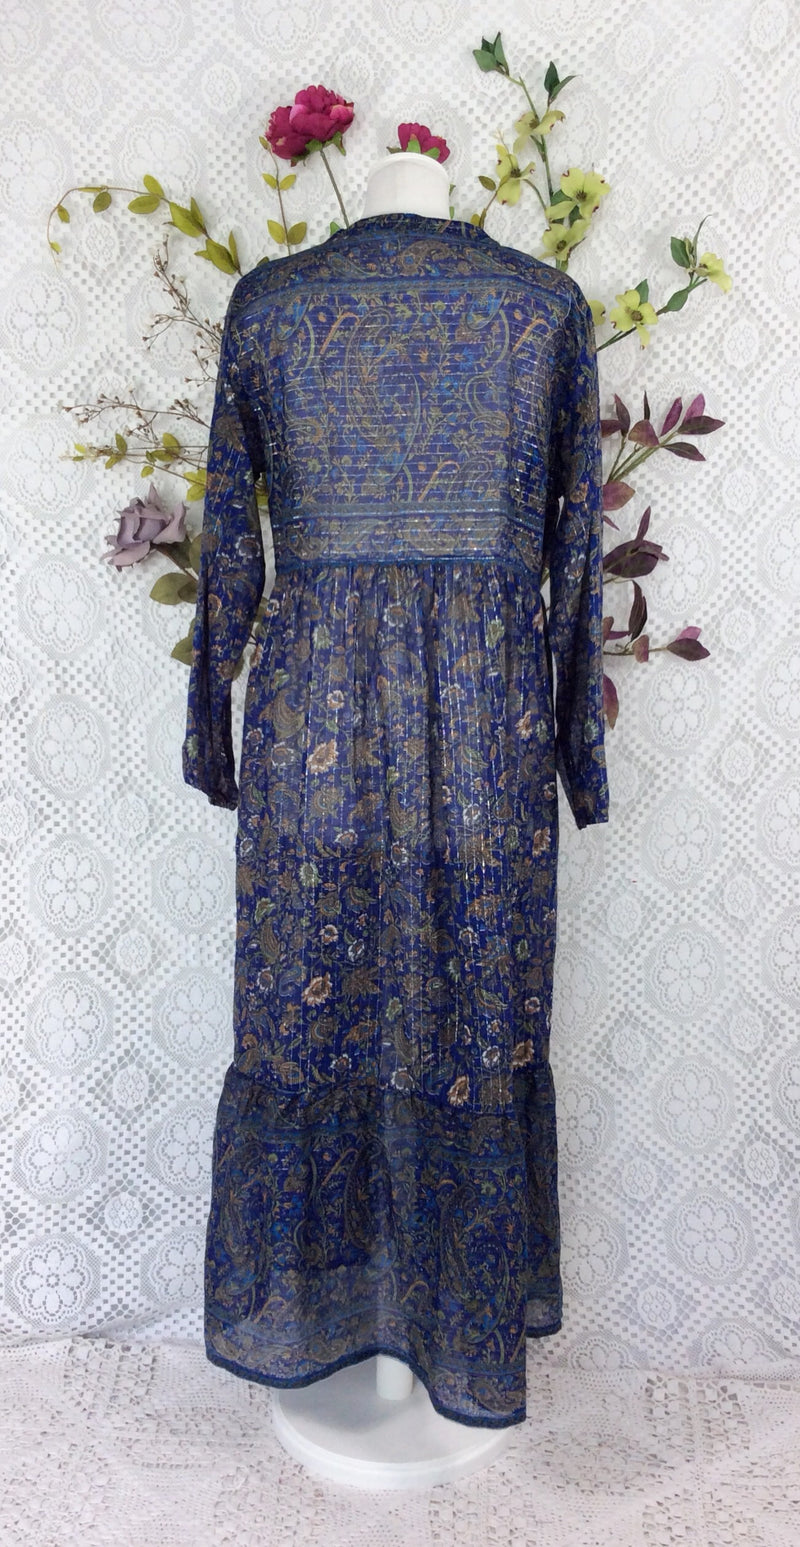 SALE Florence Dress - Sparkly Indian Cotton Smock Dress - Midnight Blue & Sage - Size S/M